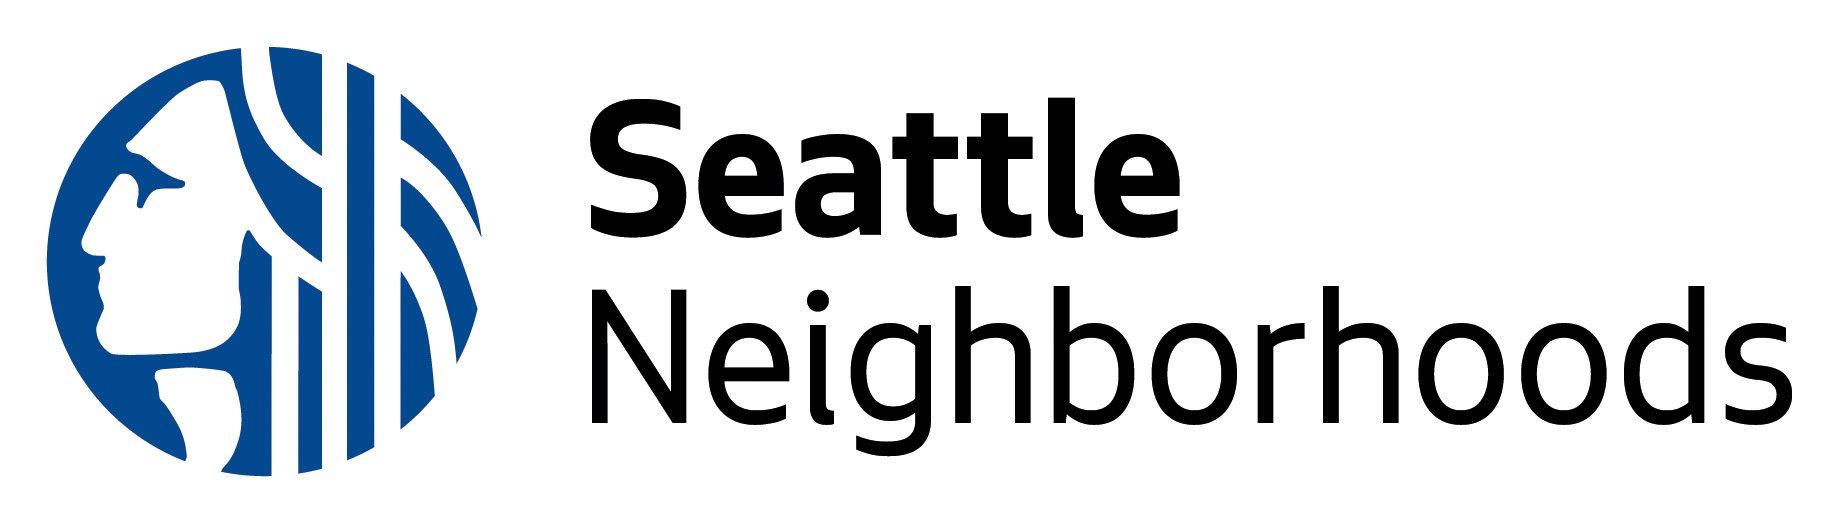 City of Seattle Dept of Neighborhoods logo